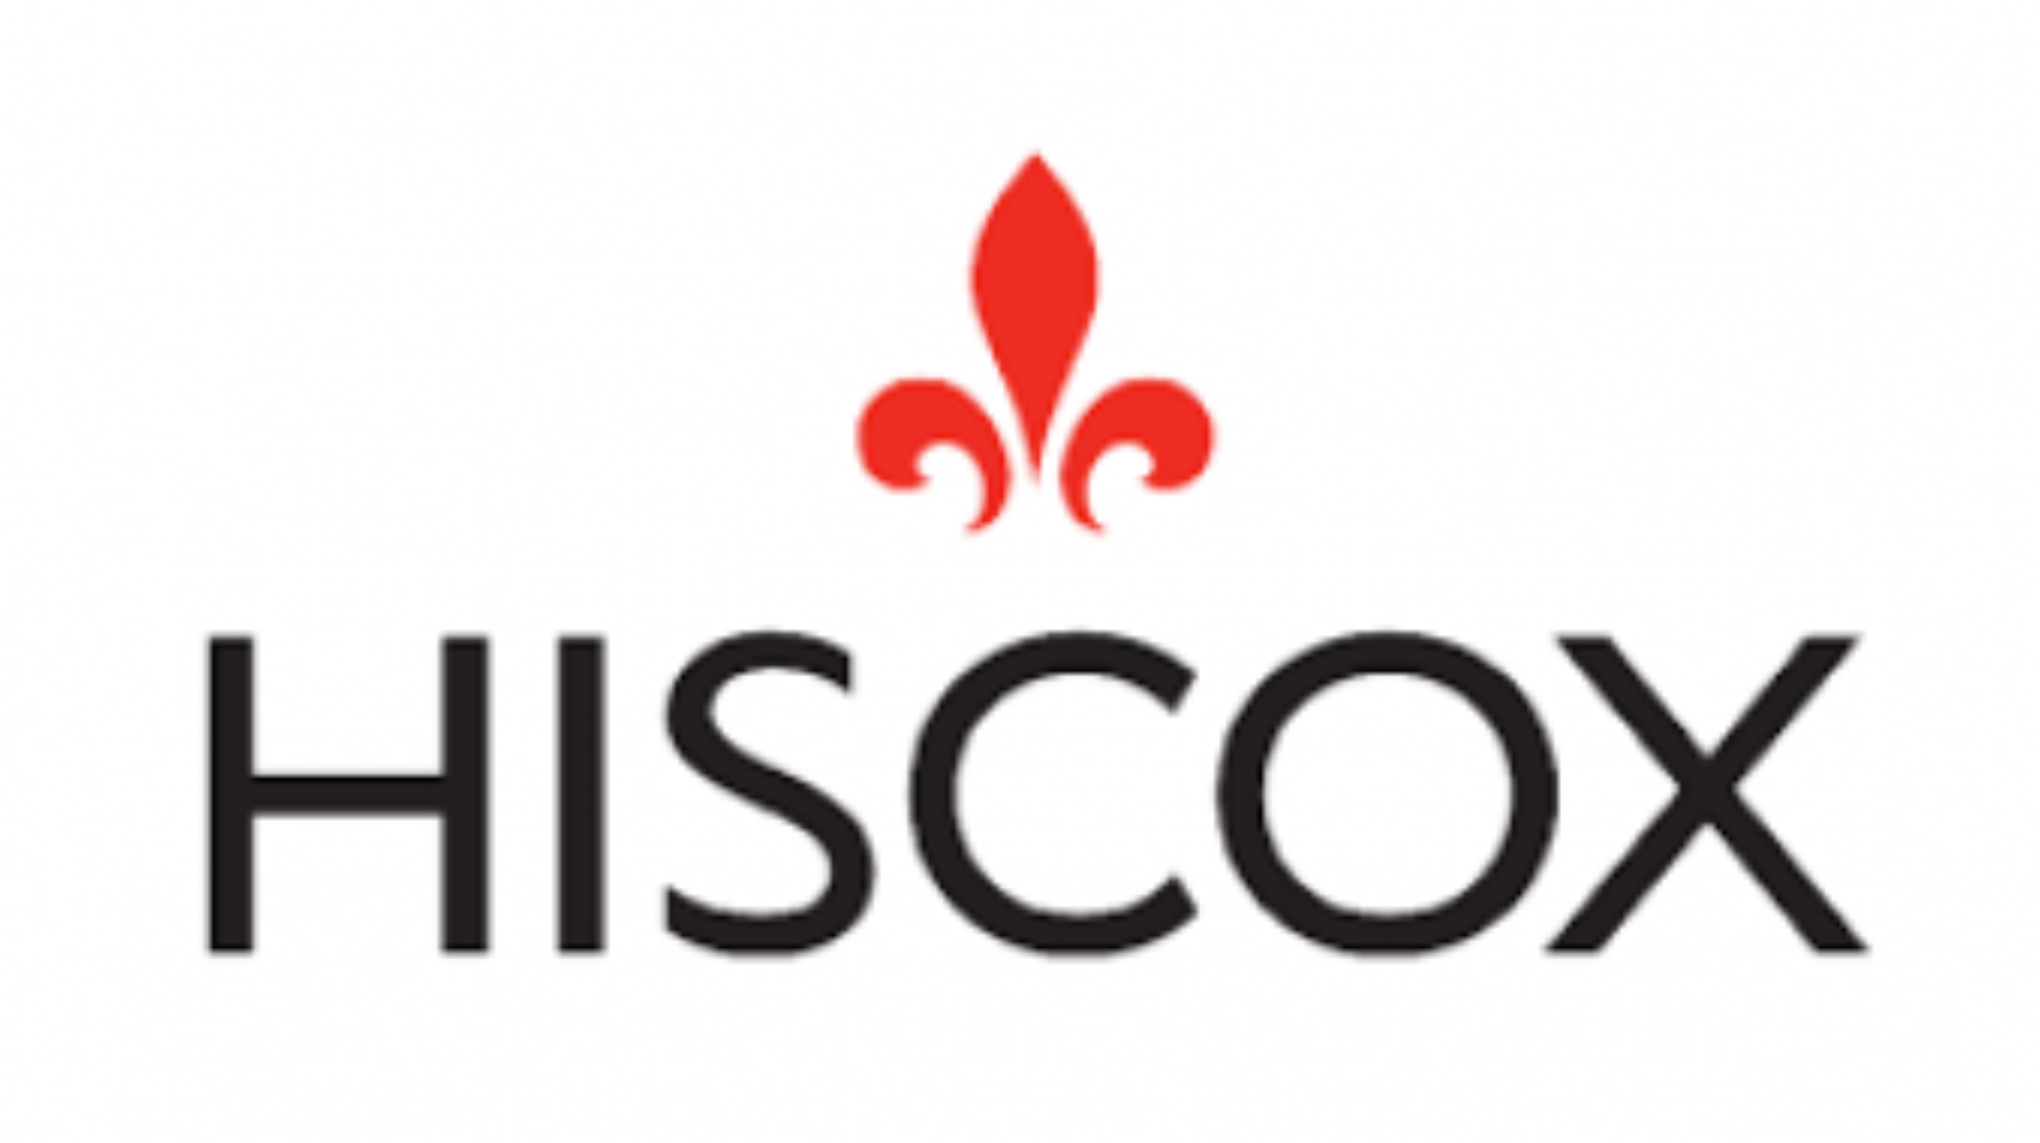 H Iscox